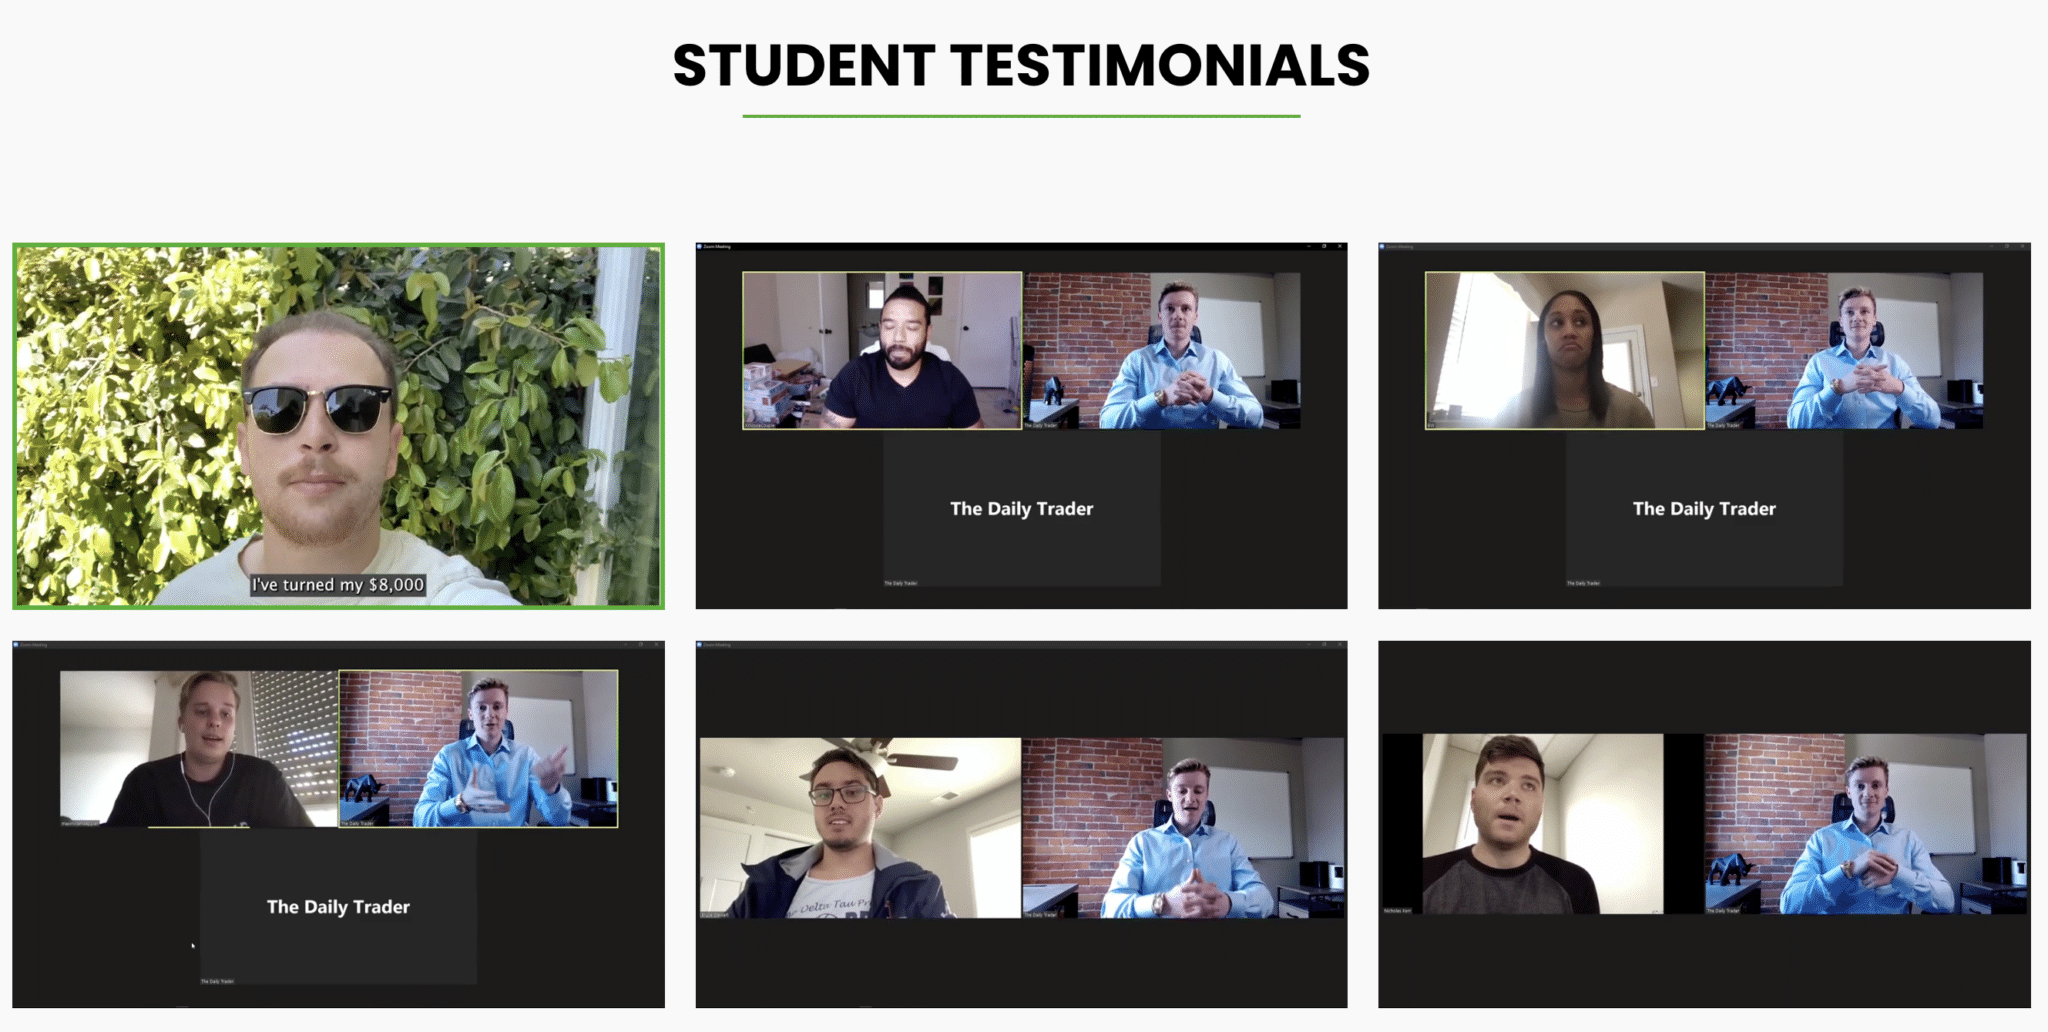 Student testimonials